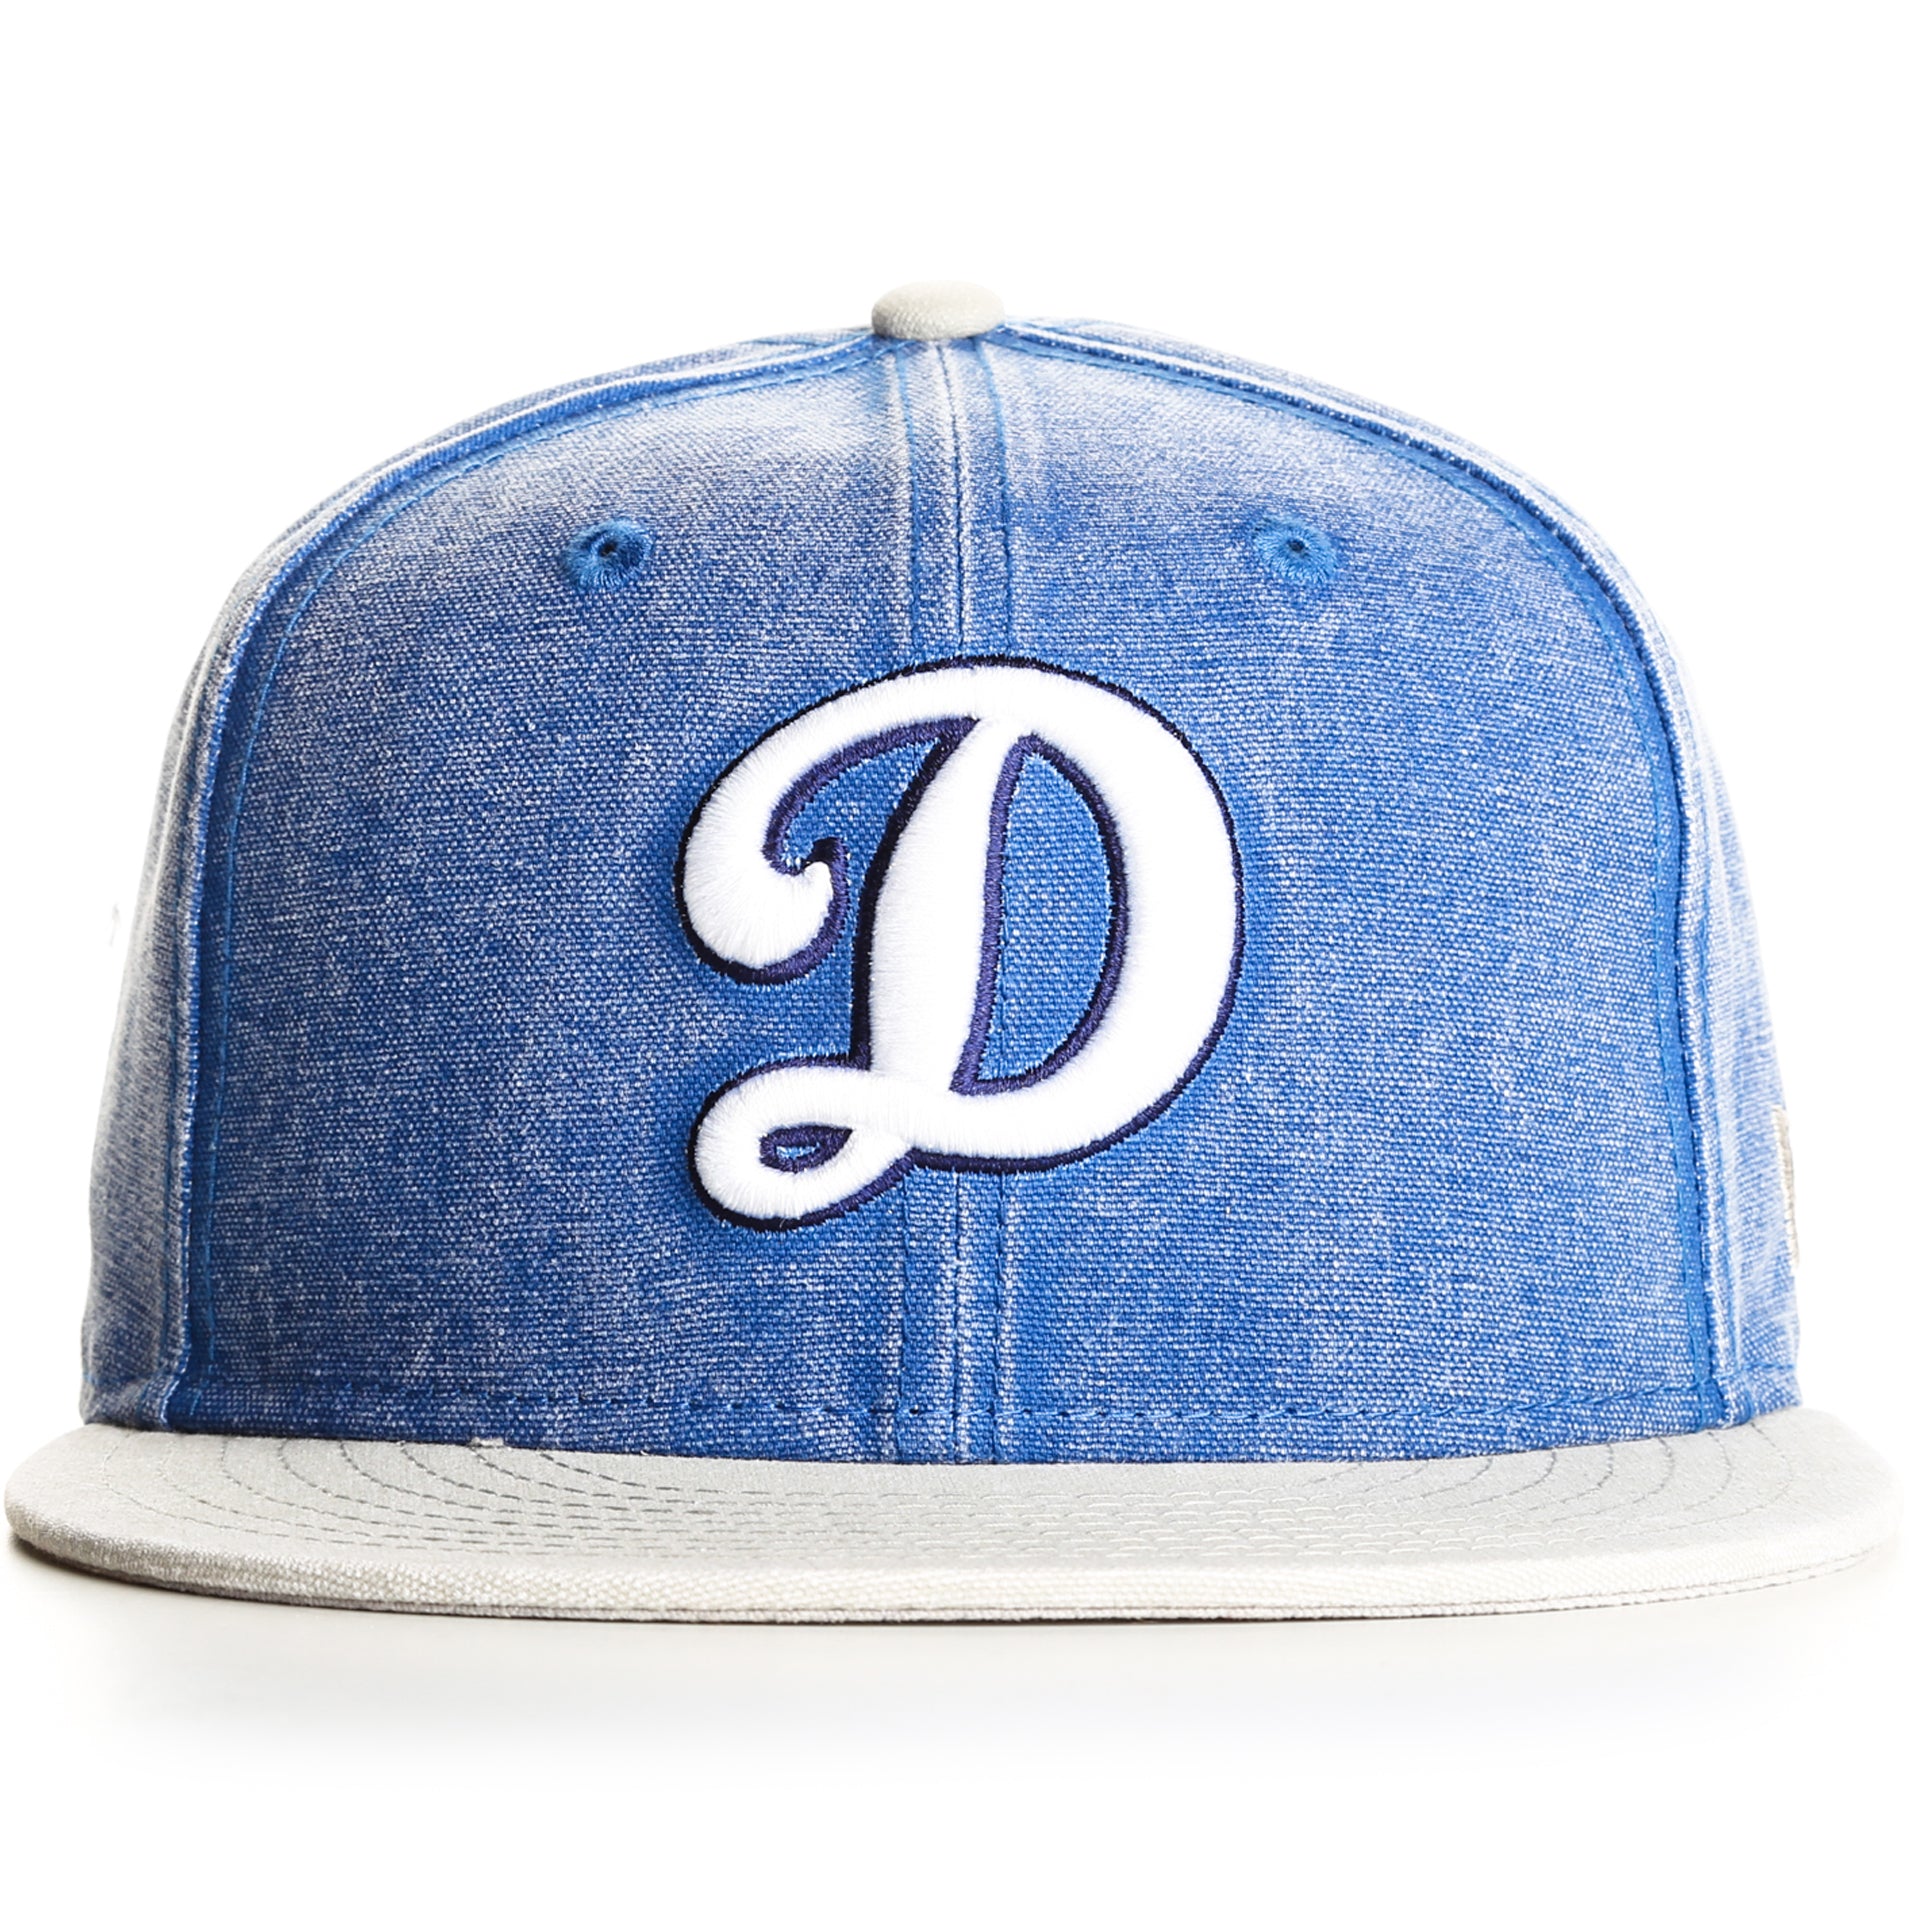 Majestic Dodgers Los Doyers Alternate Tee - Deep Royal - New Star